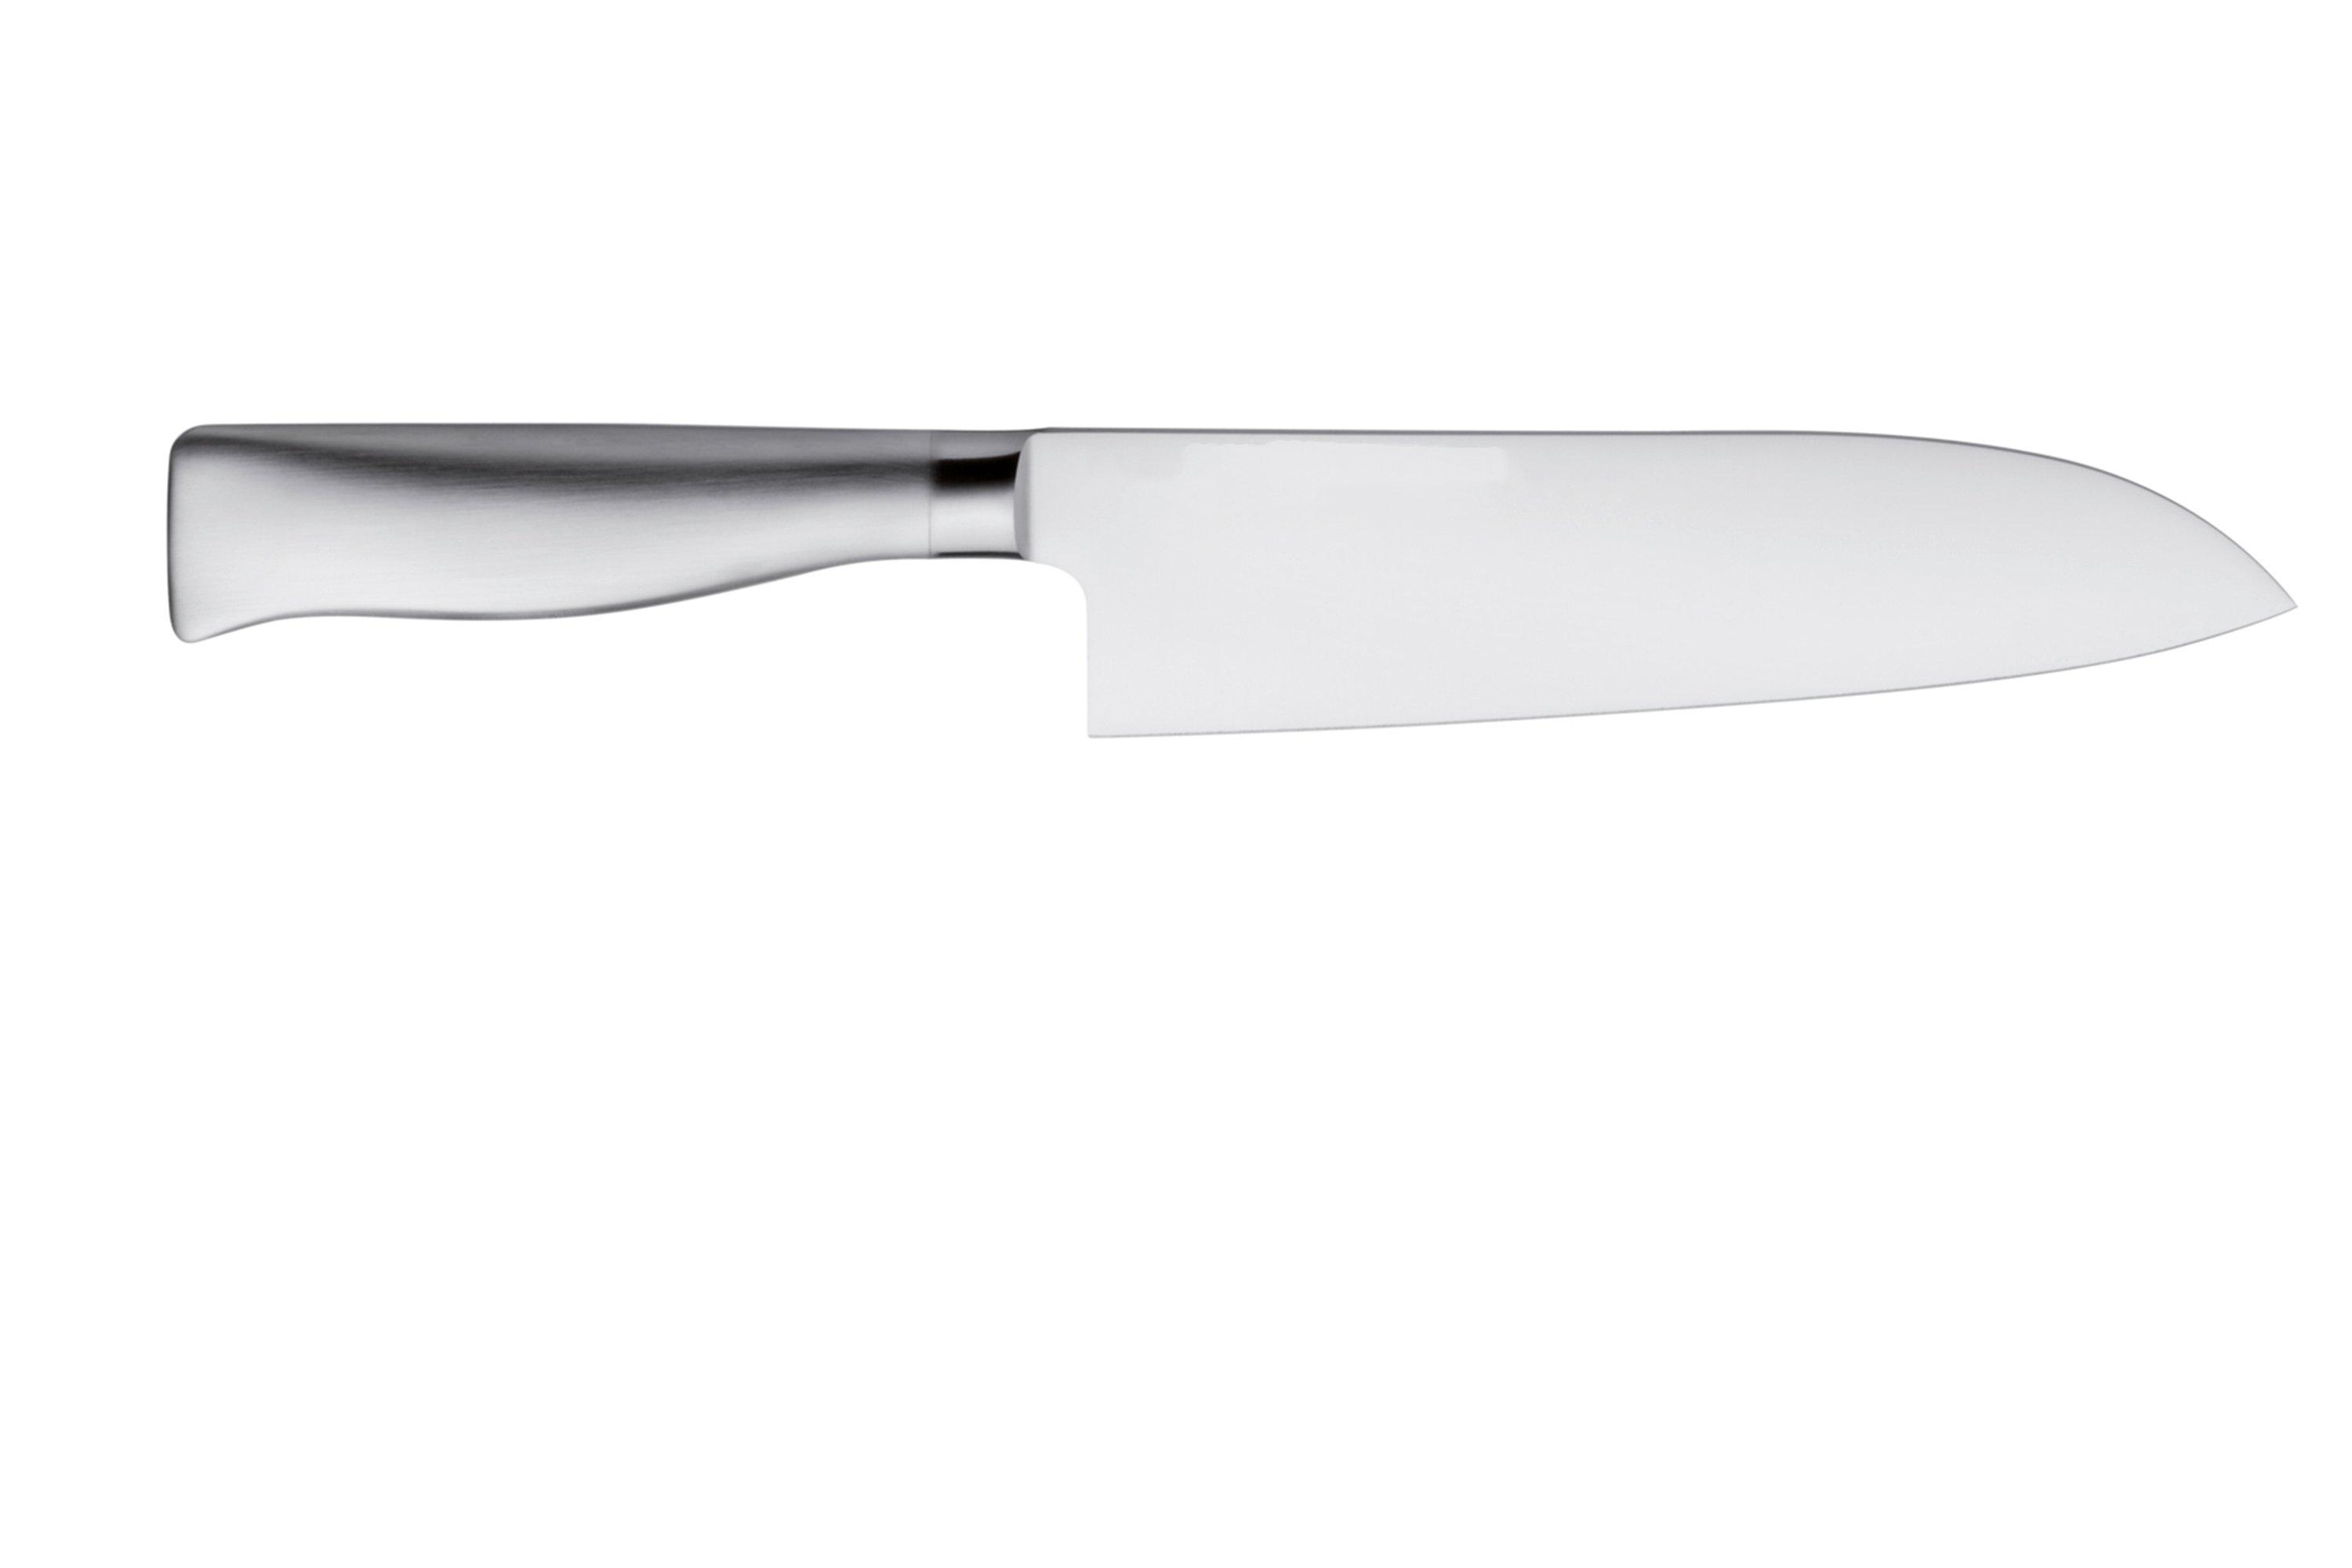 WMF Grand 1882139992 2-piece Asian knife set Advantageously kitchen | at Gourmet shopping